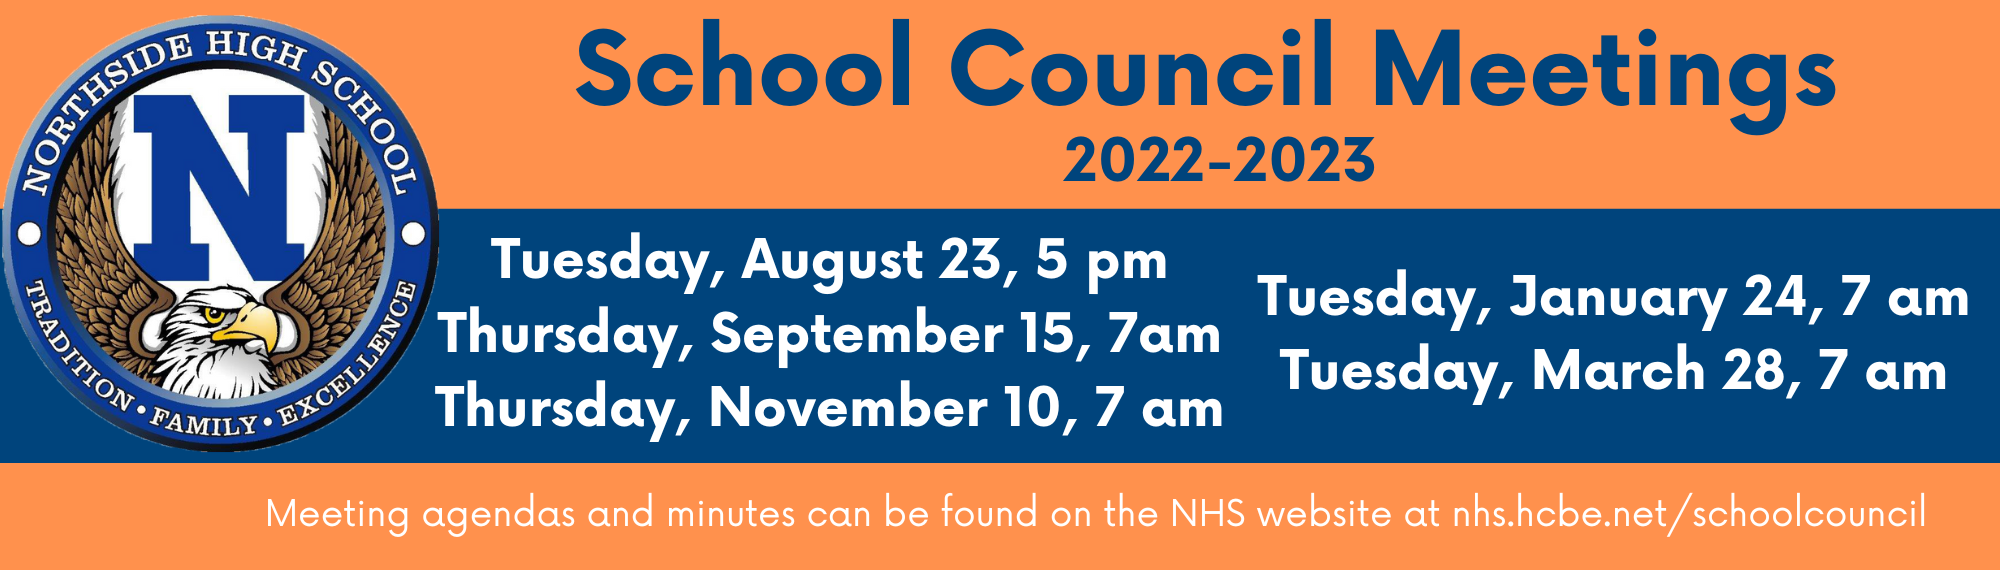 School Council Meeting Dates 2022-2023